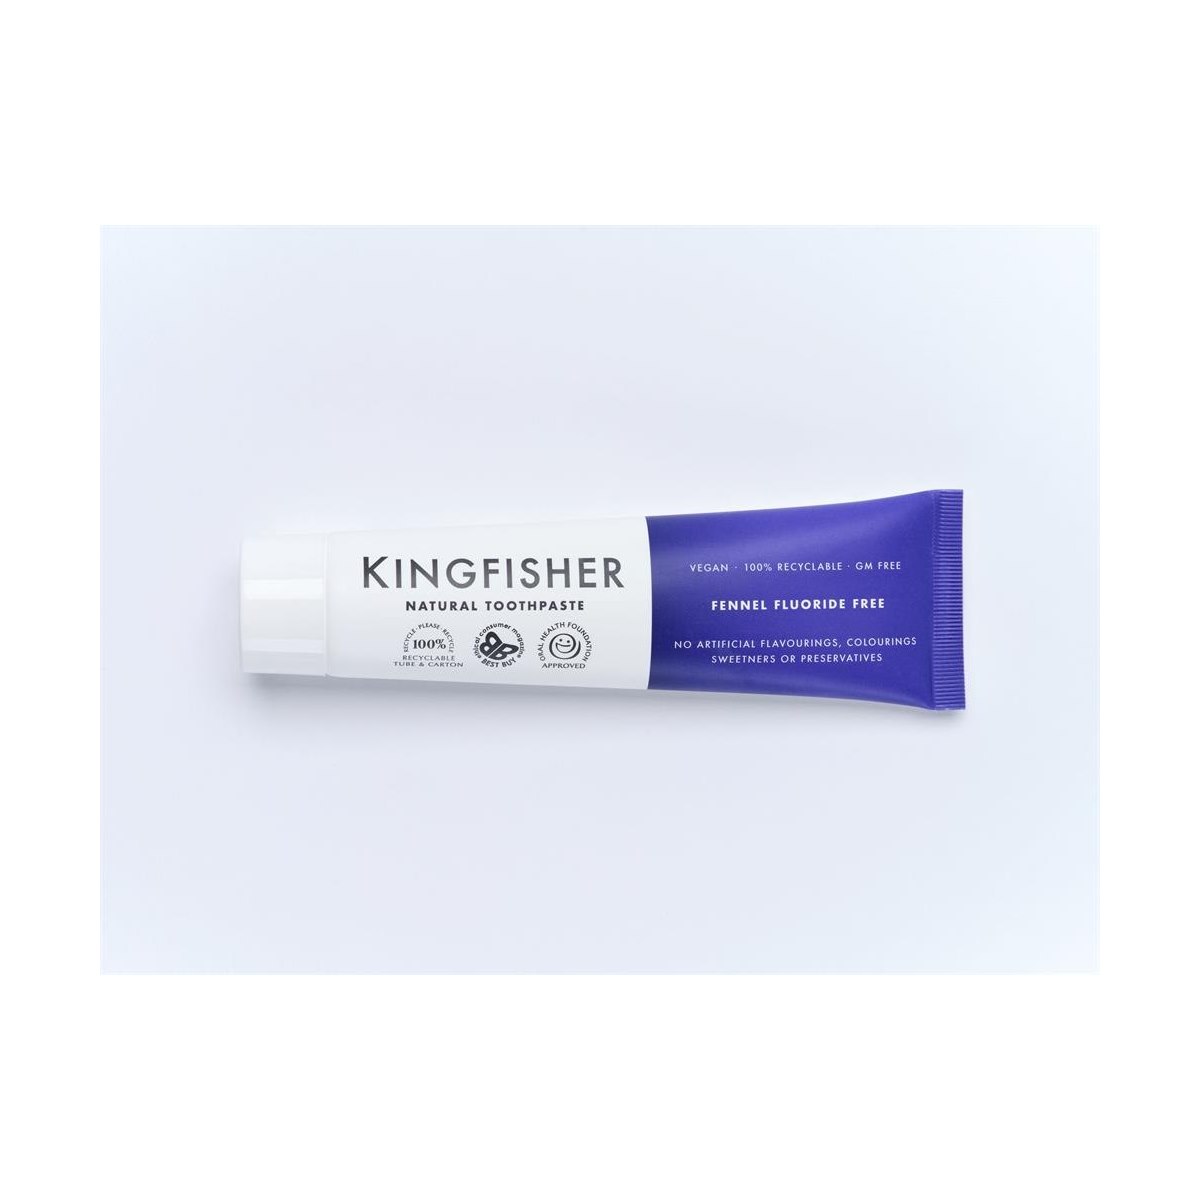 Kingfisher Fennel Flouride Free toothpaste